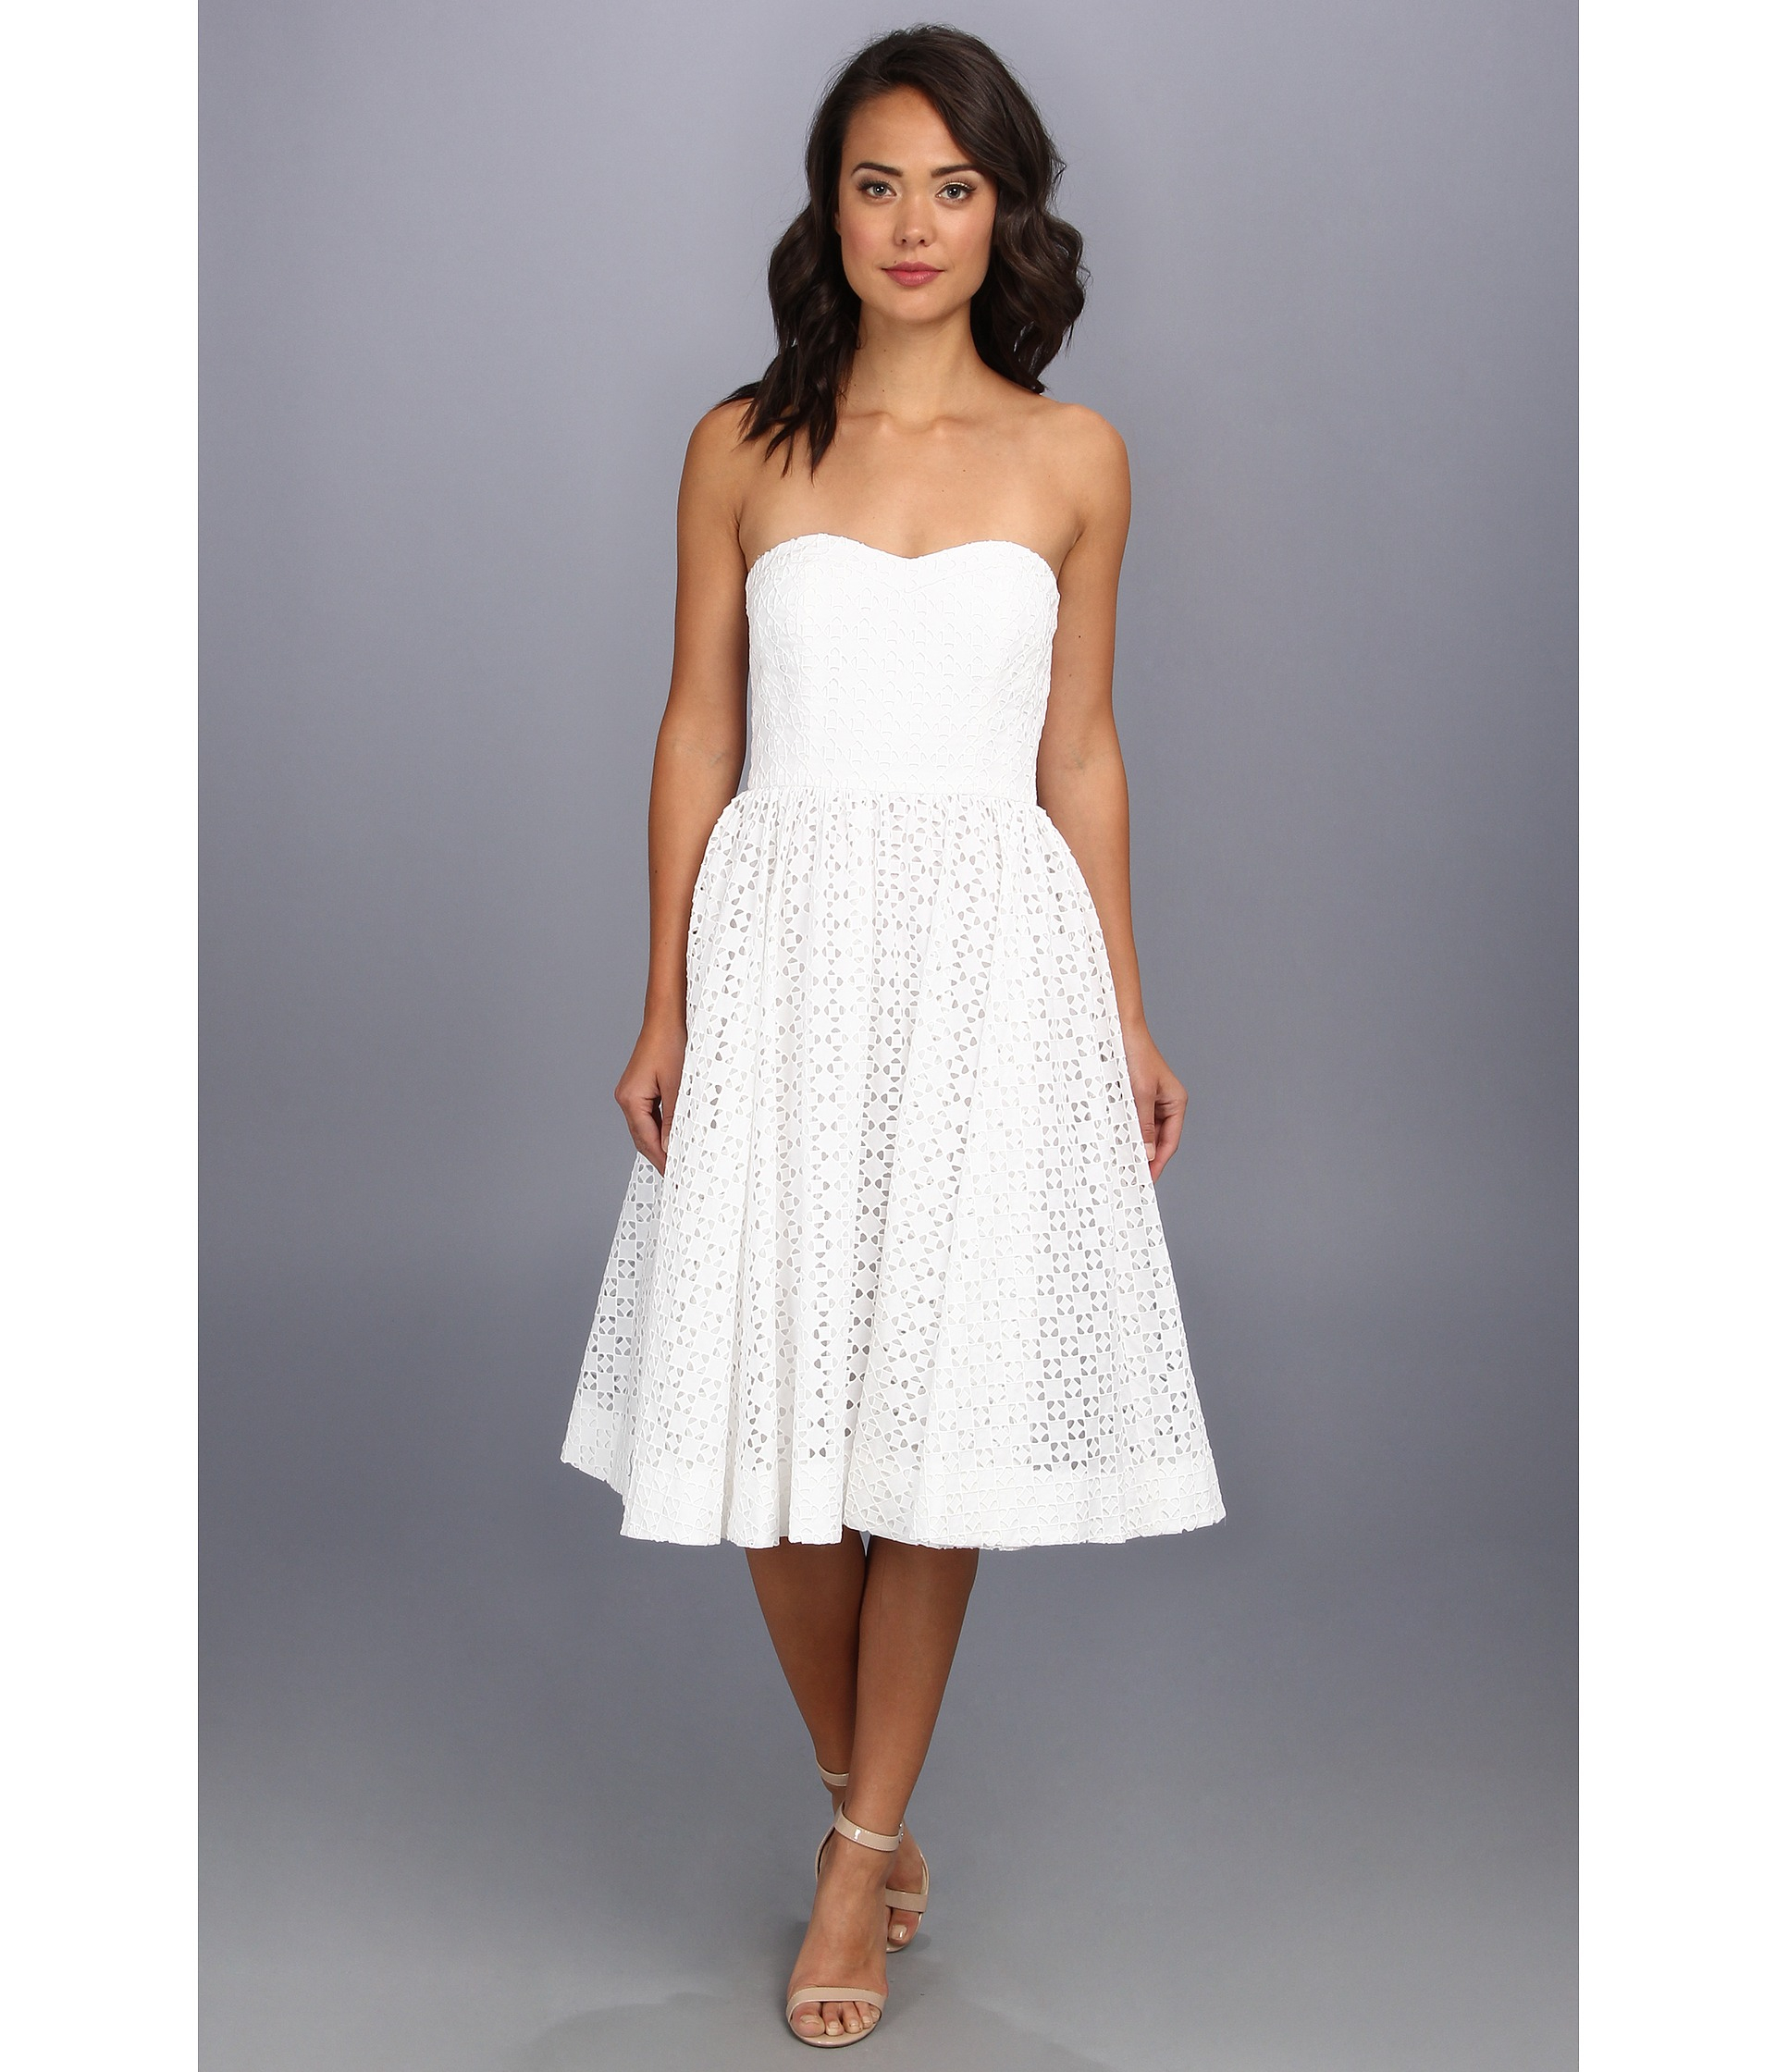 Lyst - Donna Morgan Strapless Eyelet Tea Length Dress in White